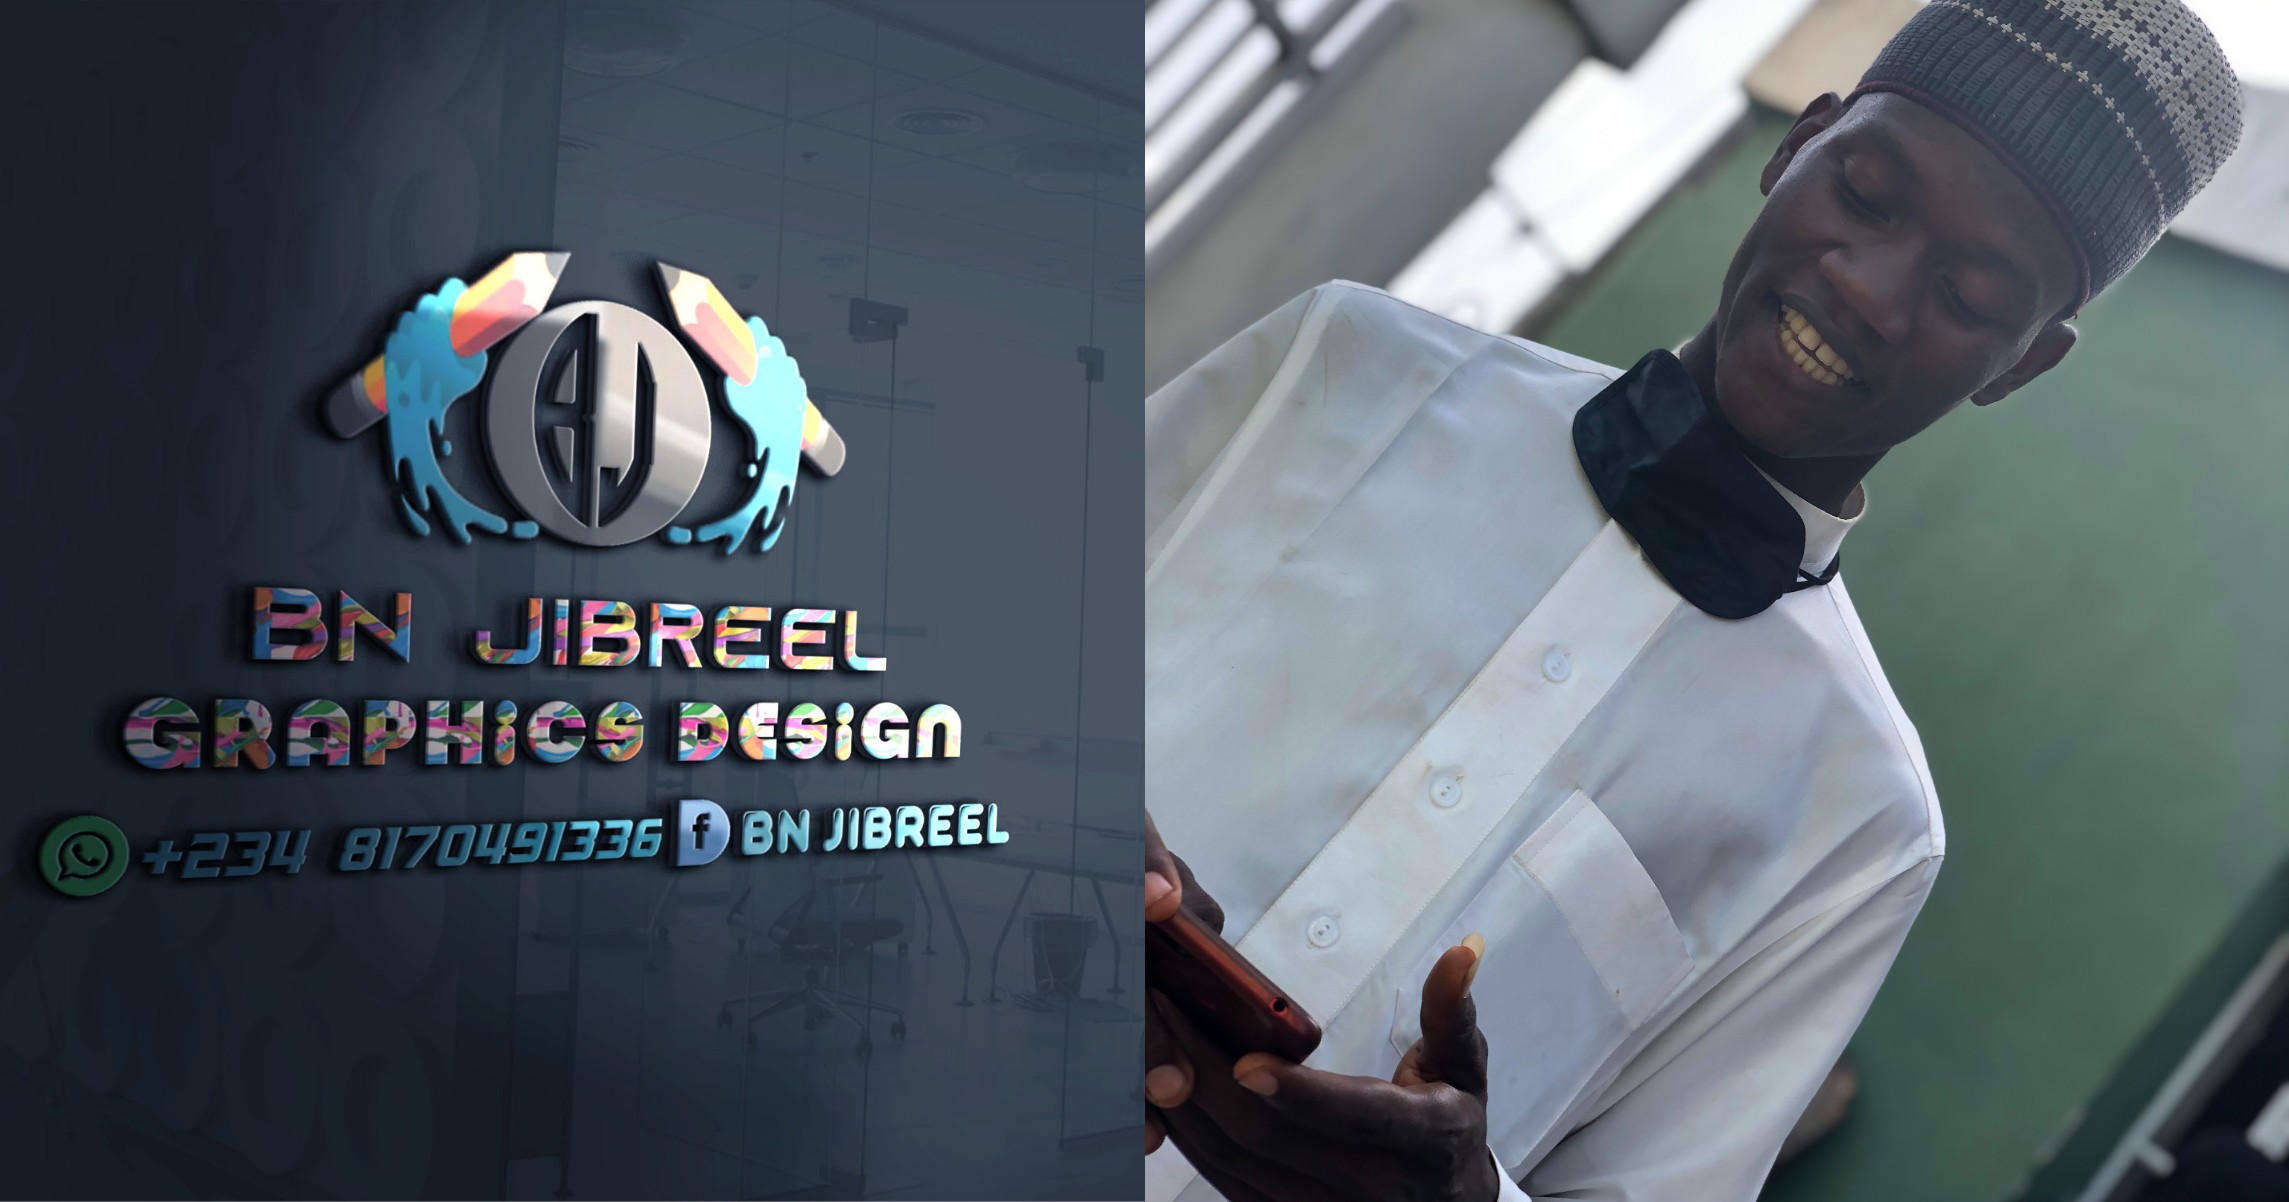 Bn Jibreel graphics design provider